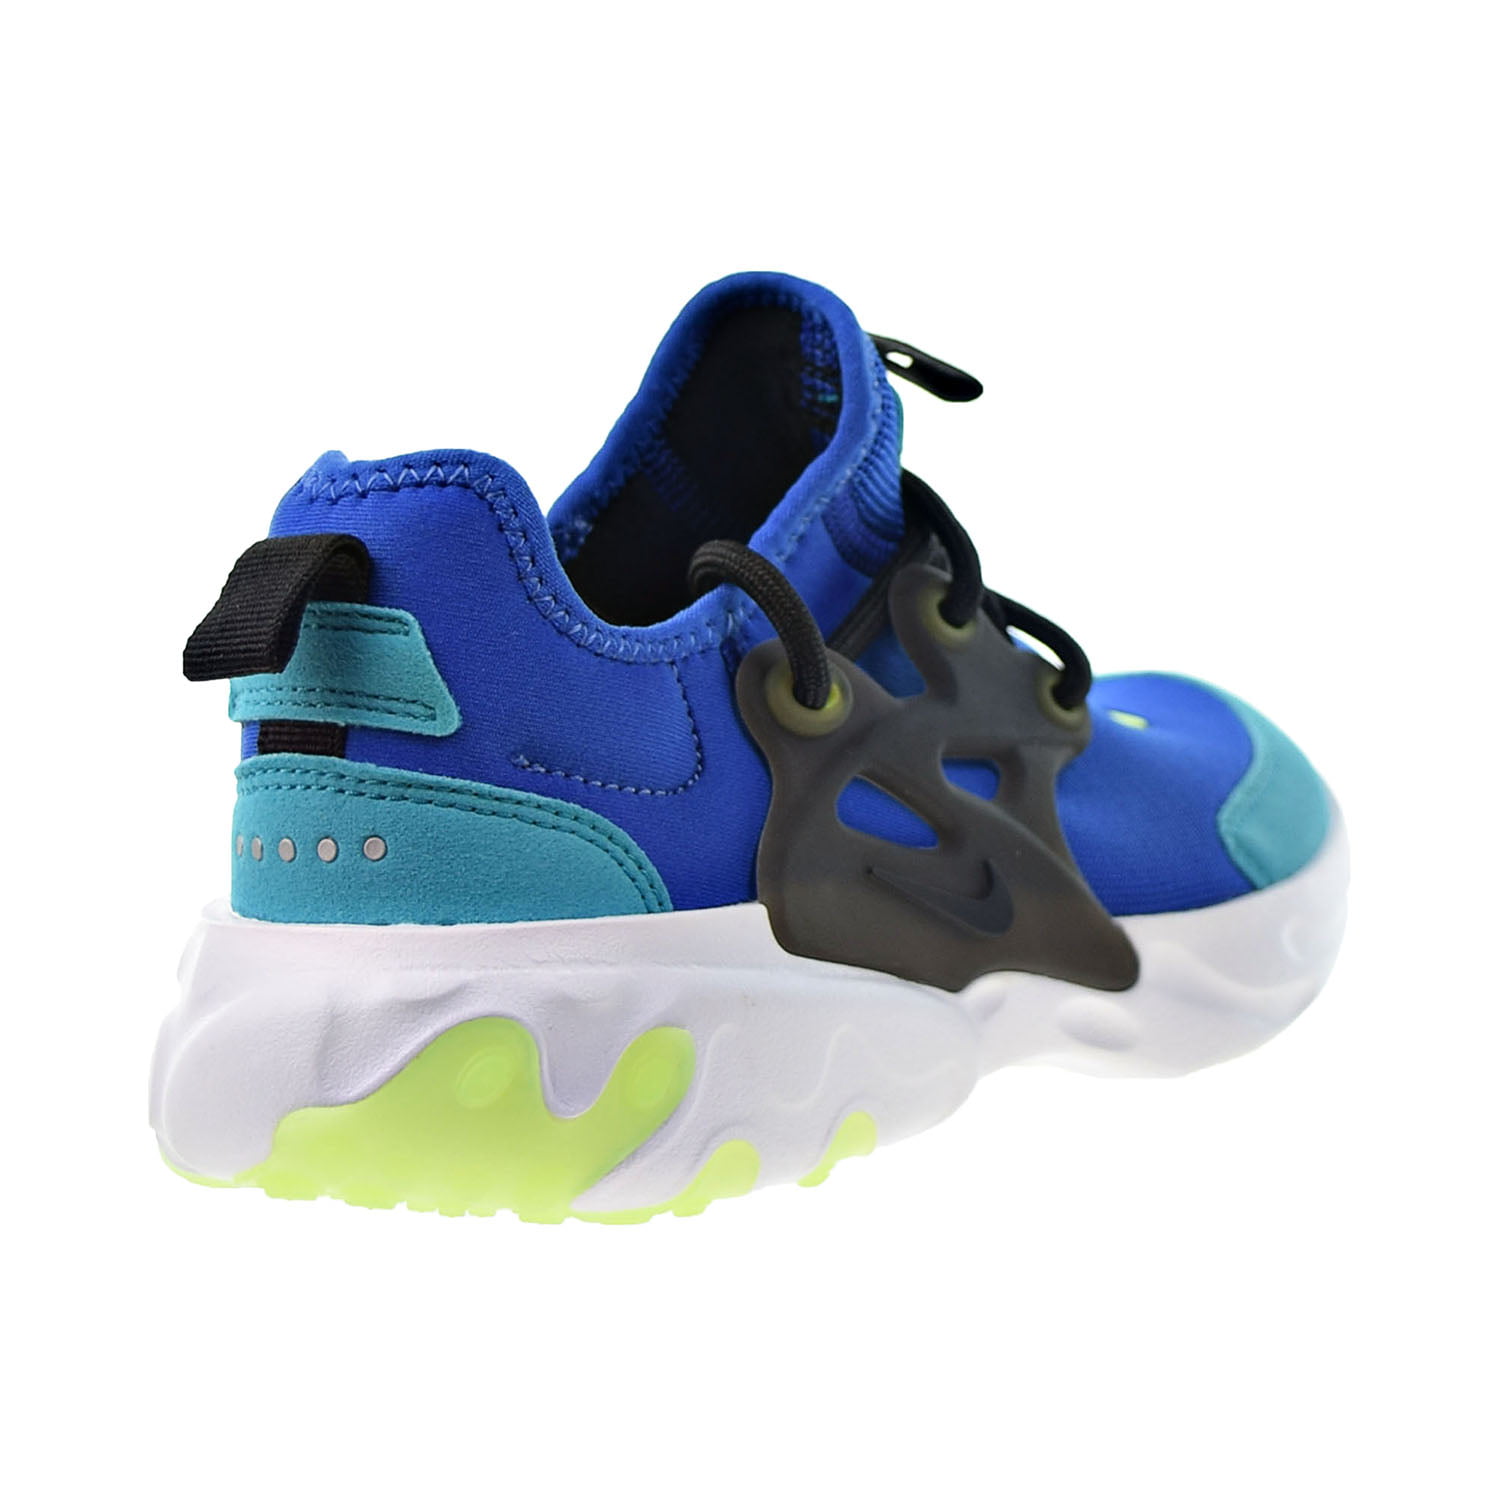 Nike React Presto Little Kids' Hyper Blue-Ghost Green-Black bq4003-403 -